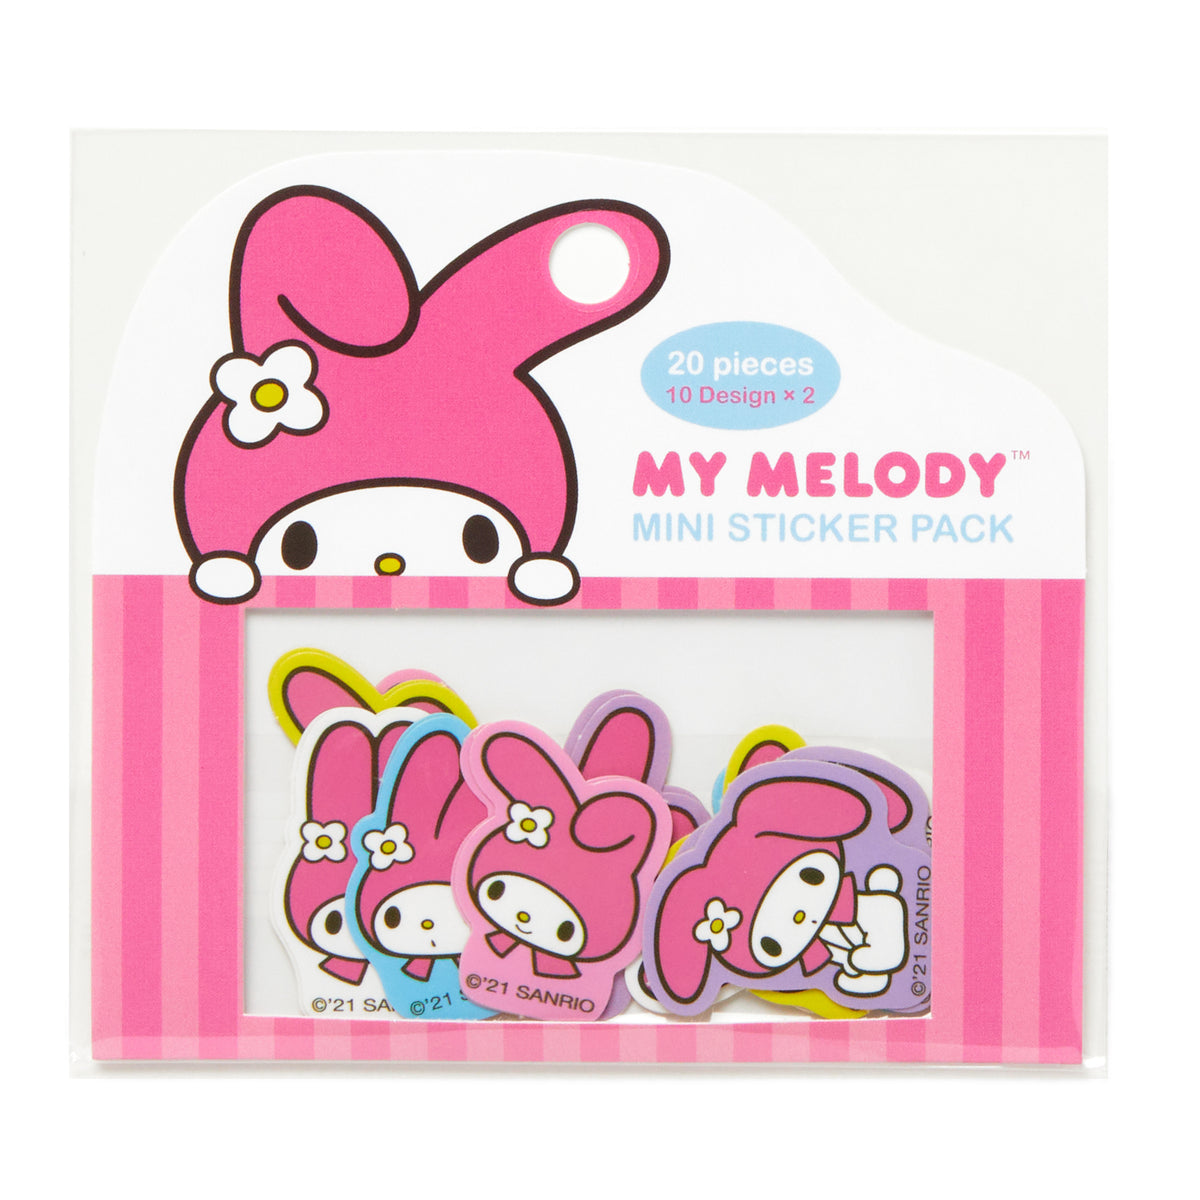 My Melody Mini Sticker Pack Stationery HUNET USA   